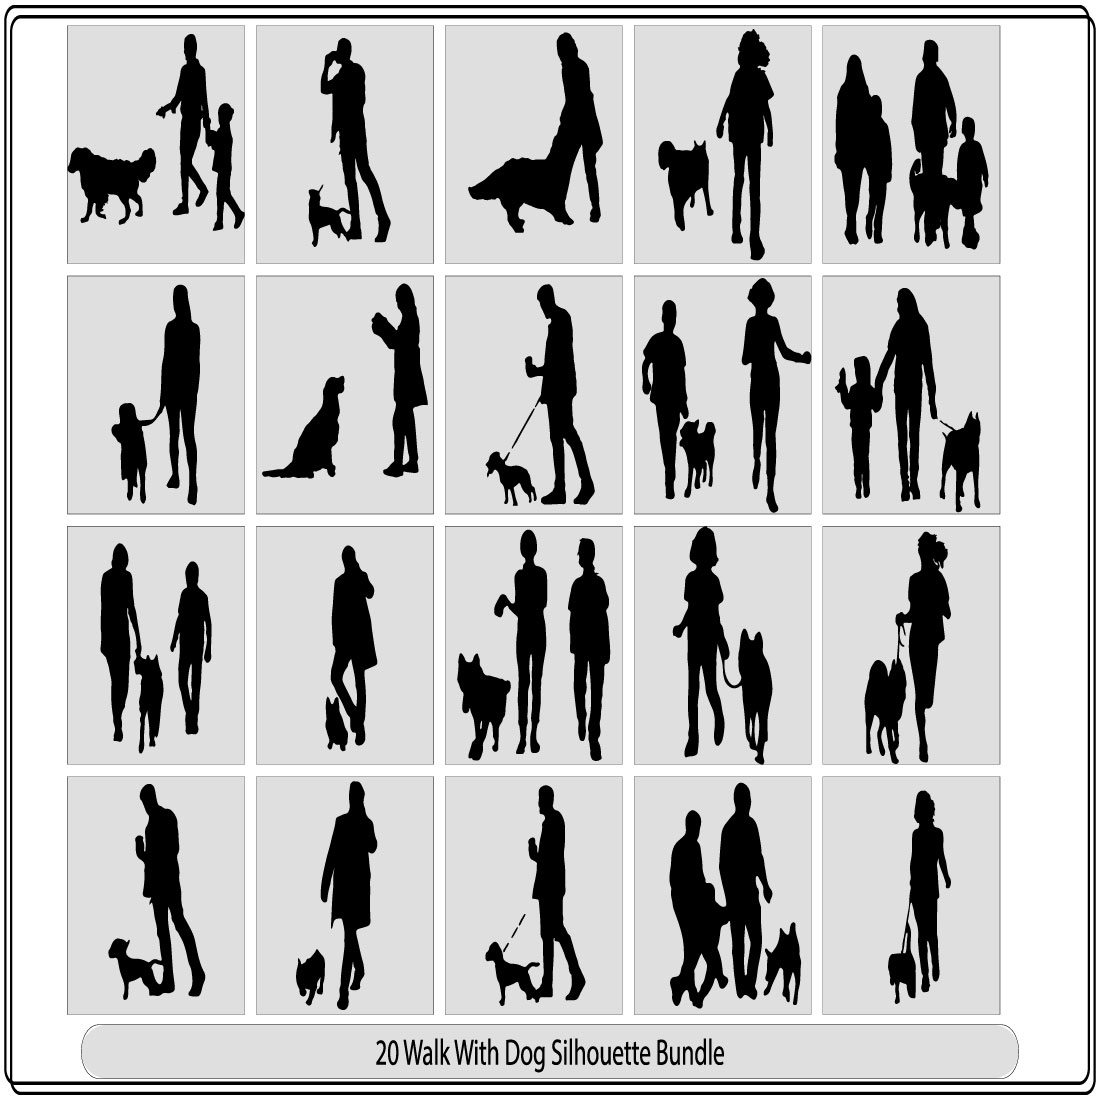 People walking with dogsA man walking his dog, Man Walking Dog,Black and white vector illustration cover image.